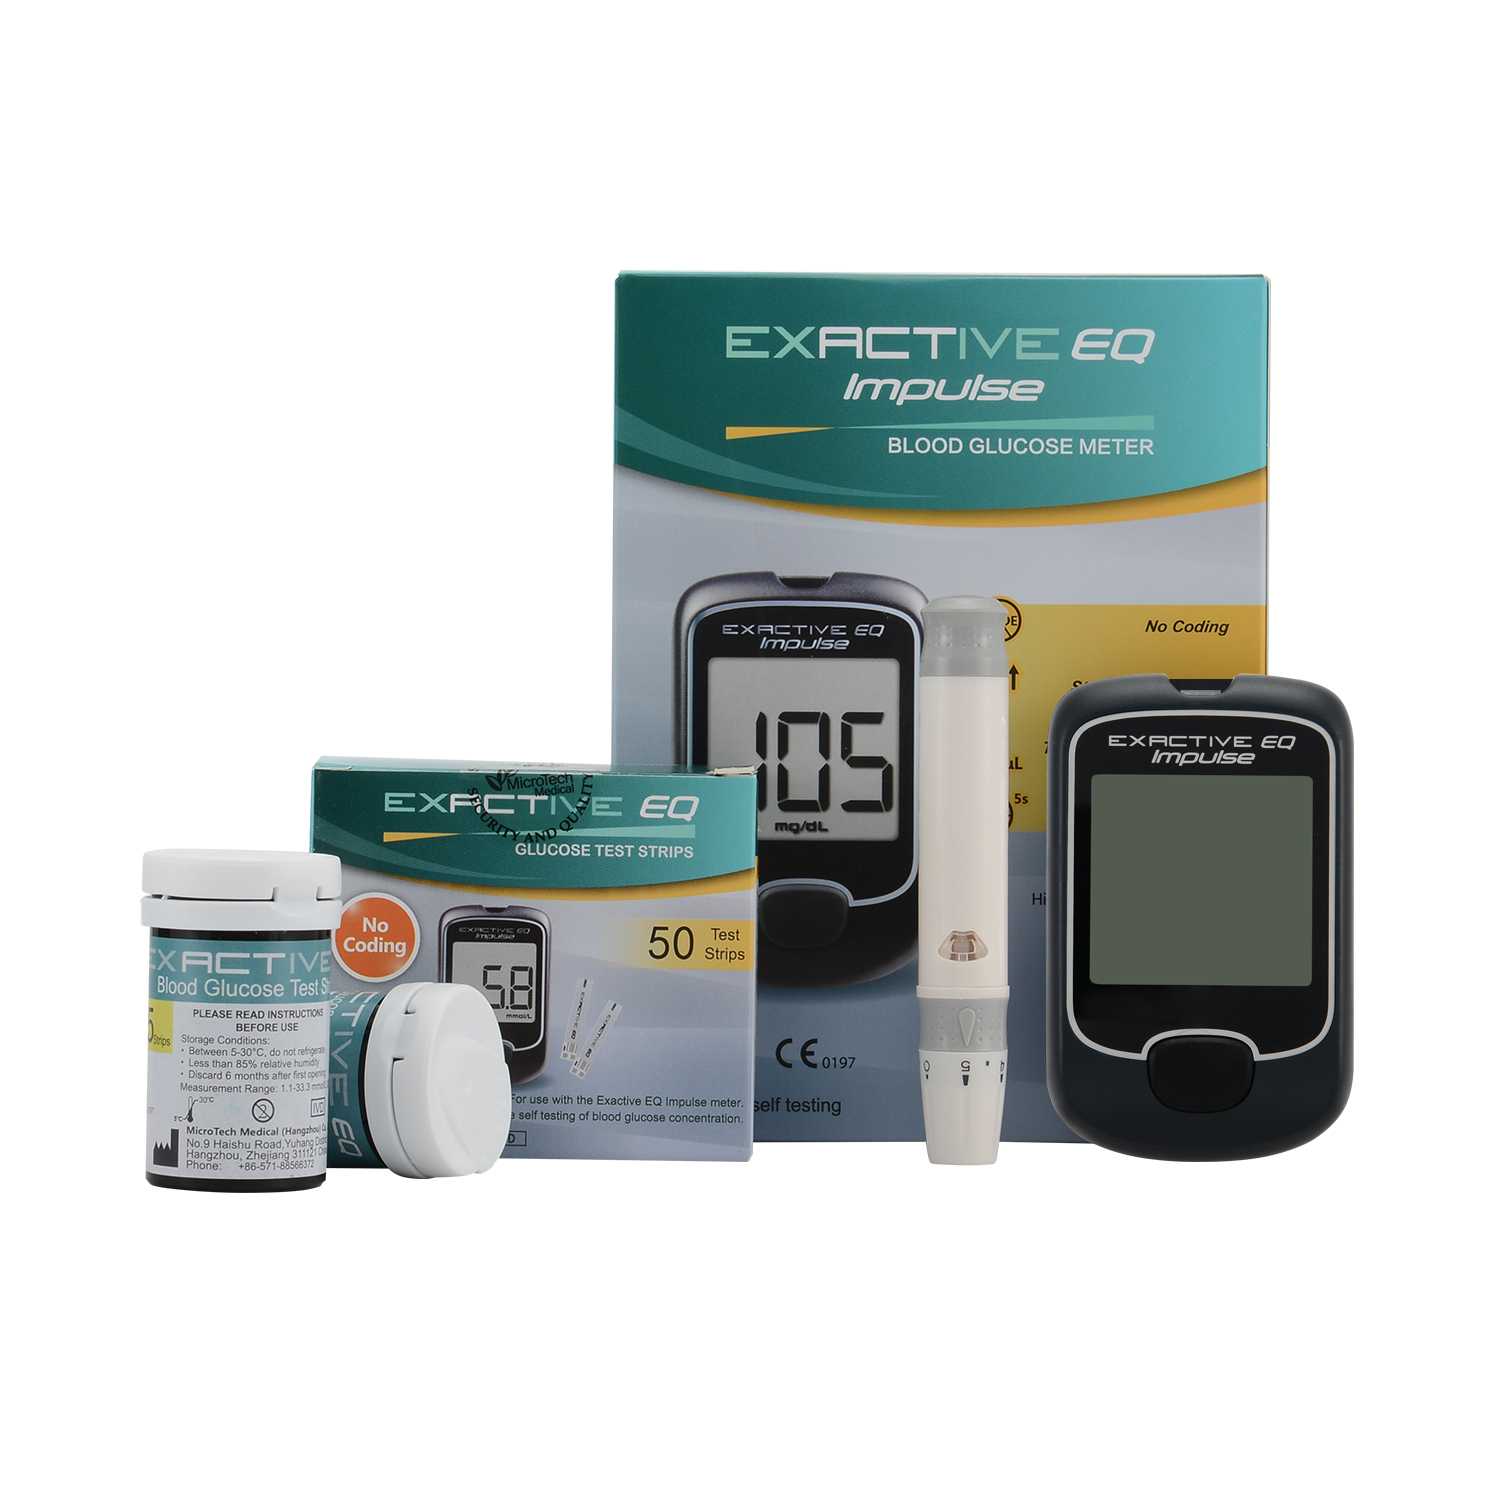 SALE?พร้อมจัดส่ง? เครื่องวัดระดับน้ำตาลในเลือด สำหรับผู้เป็นเบาหวาน EXACTIVE EQ Impulse Blood Glucose Meter  ?FREE Test Strip 50pcs+ Twist Lancets 50pcs?